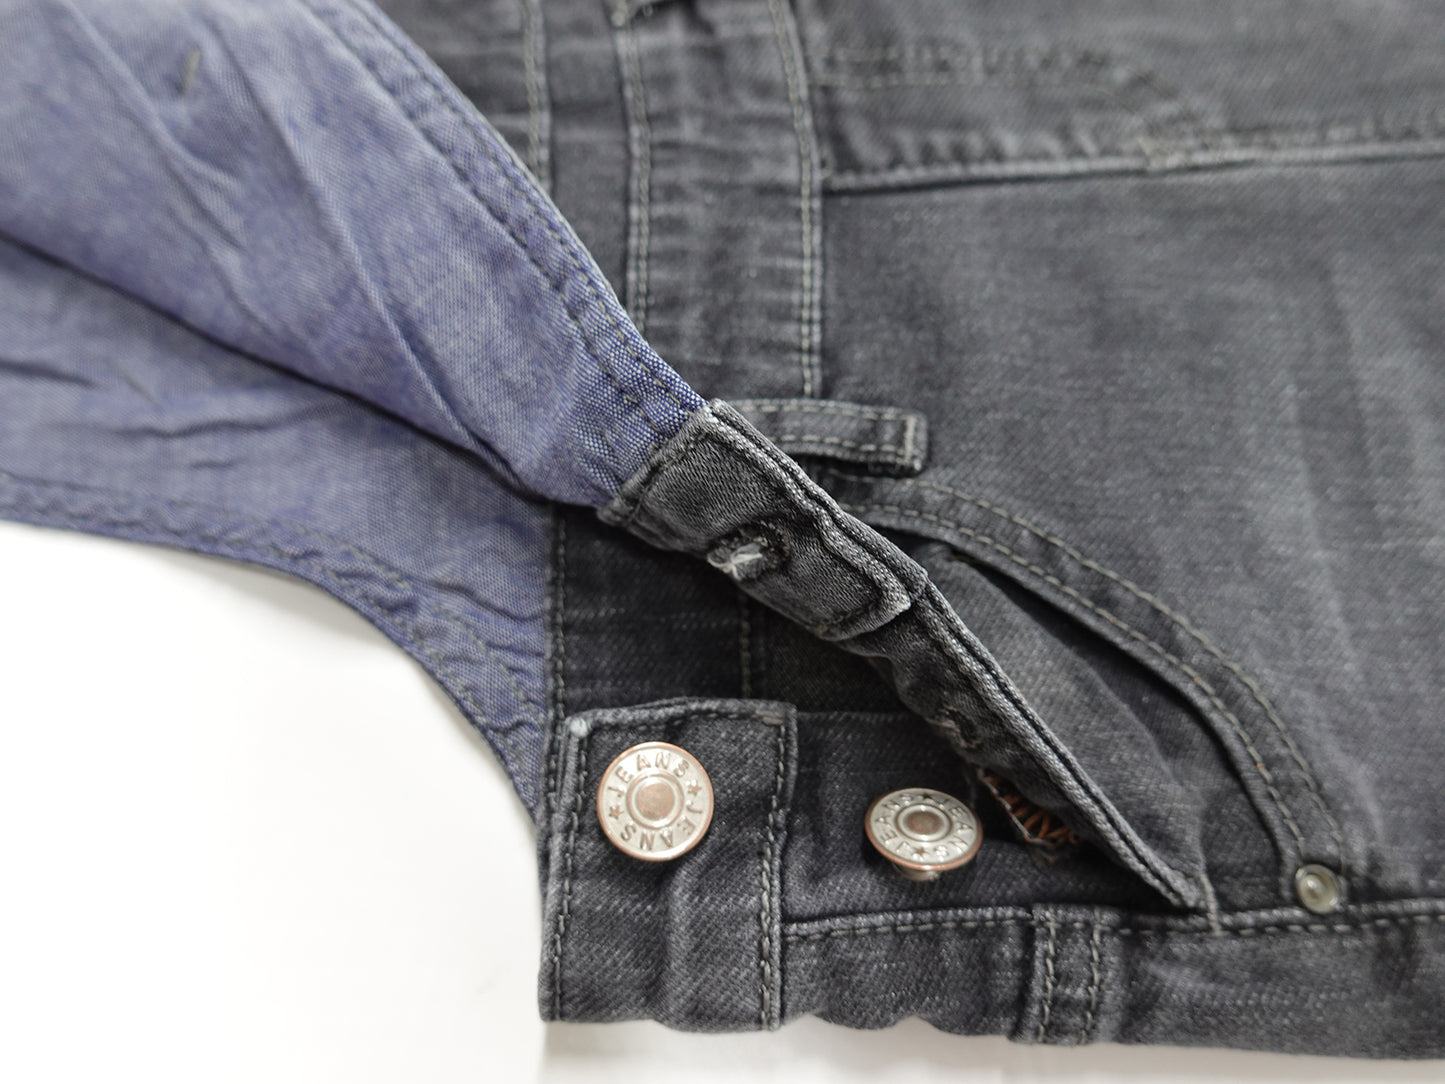 Little Boys Slim Fit Jeans Ripped Big Bib Pocket Fashion Denim Overalls